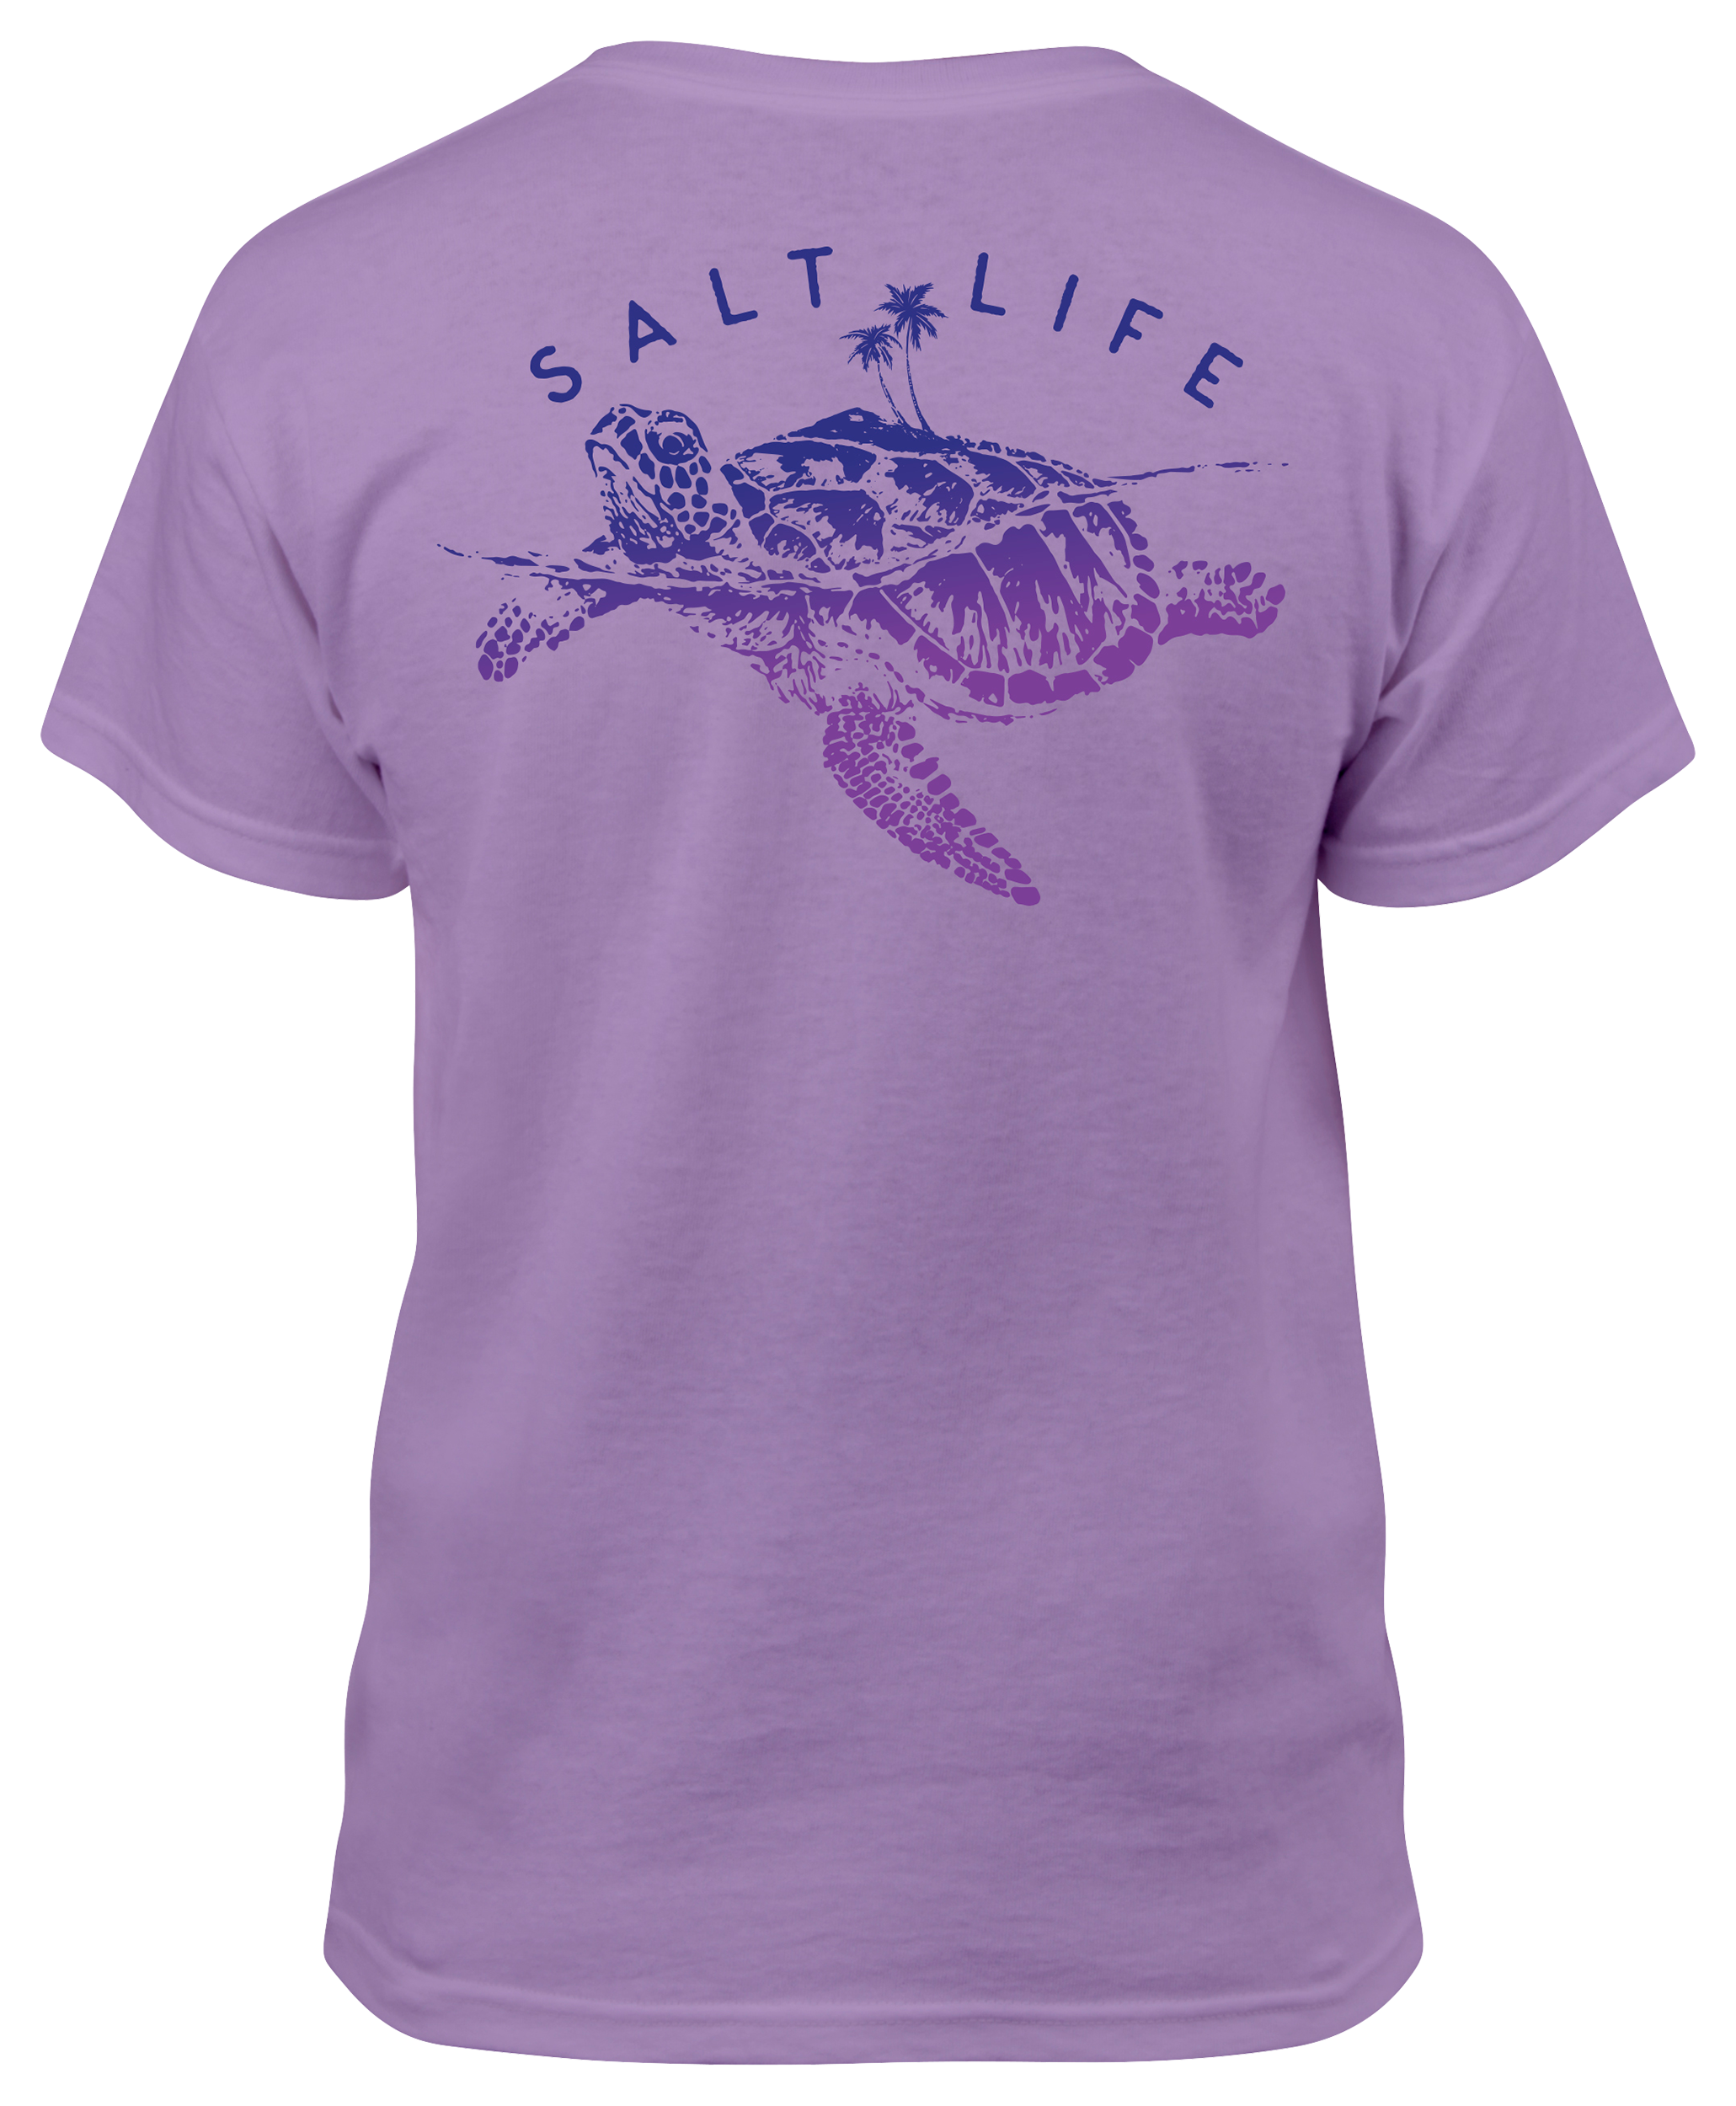 Salt Life Turtle Island Short-Sleeve T-Shirt for Kids